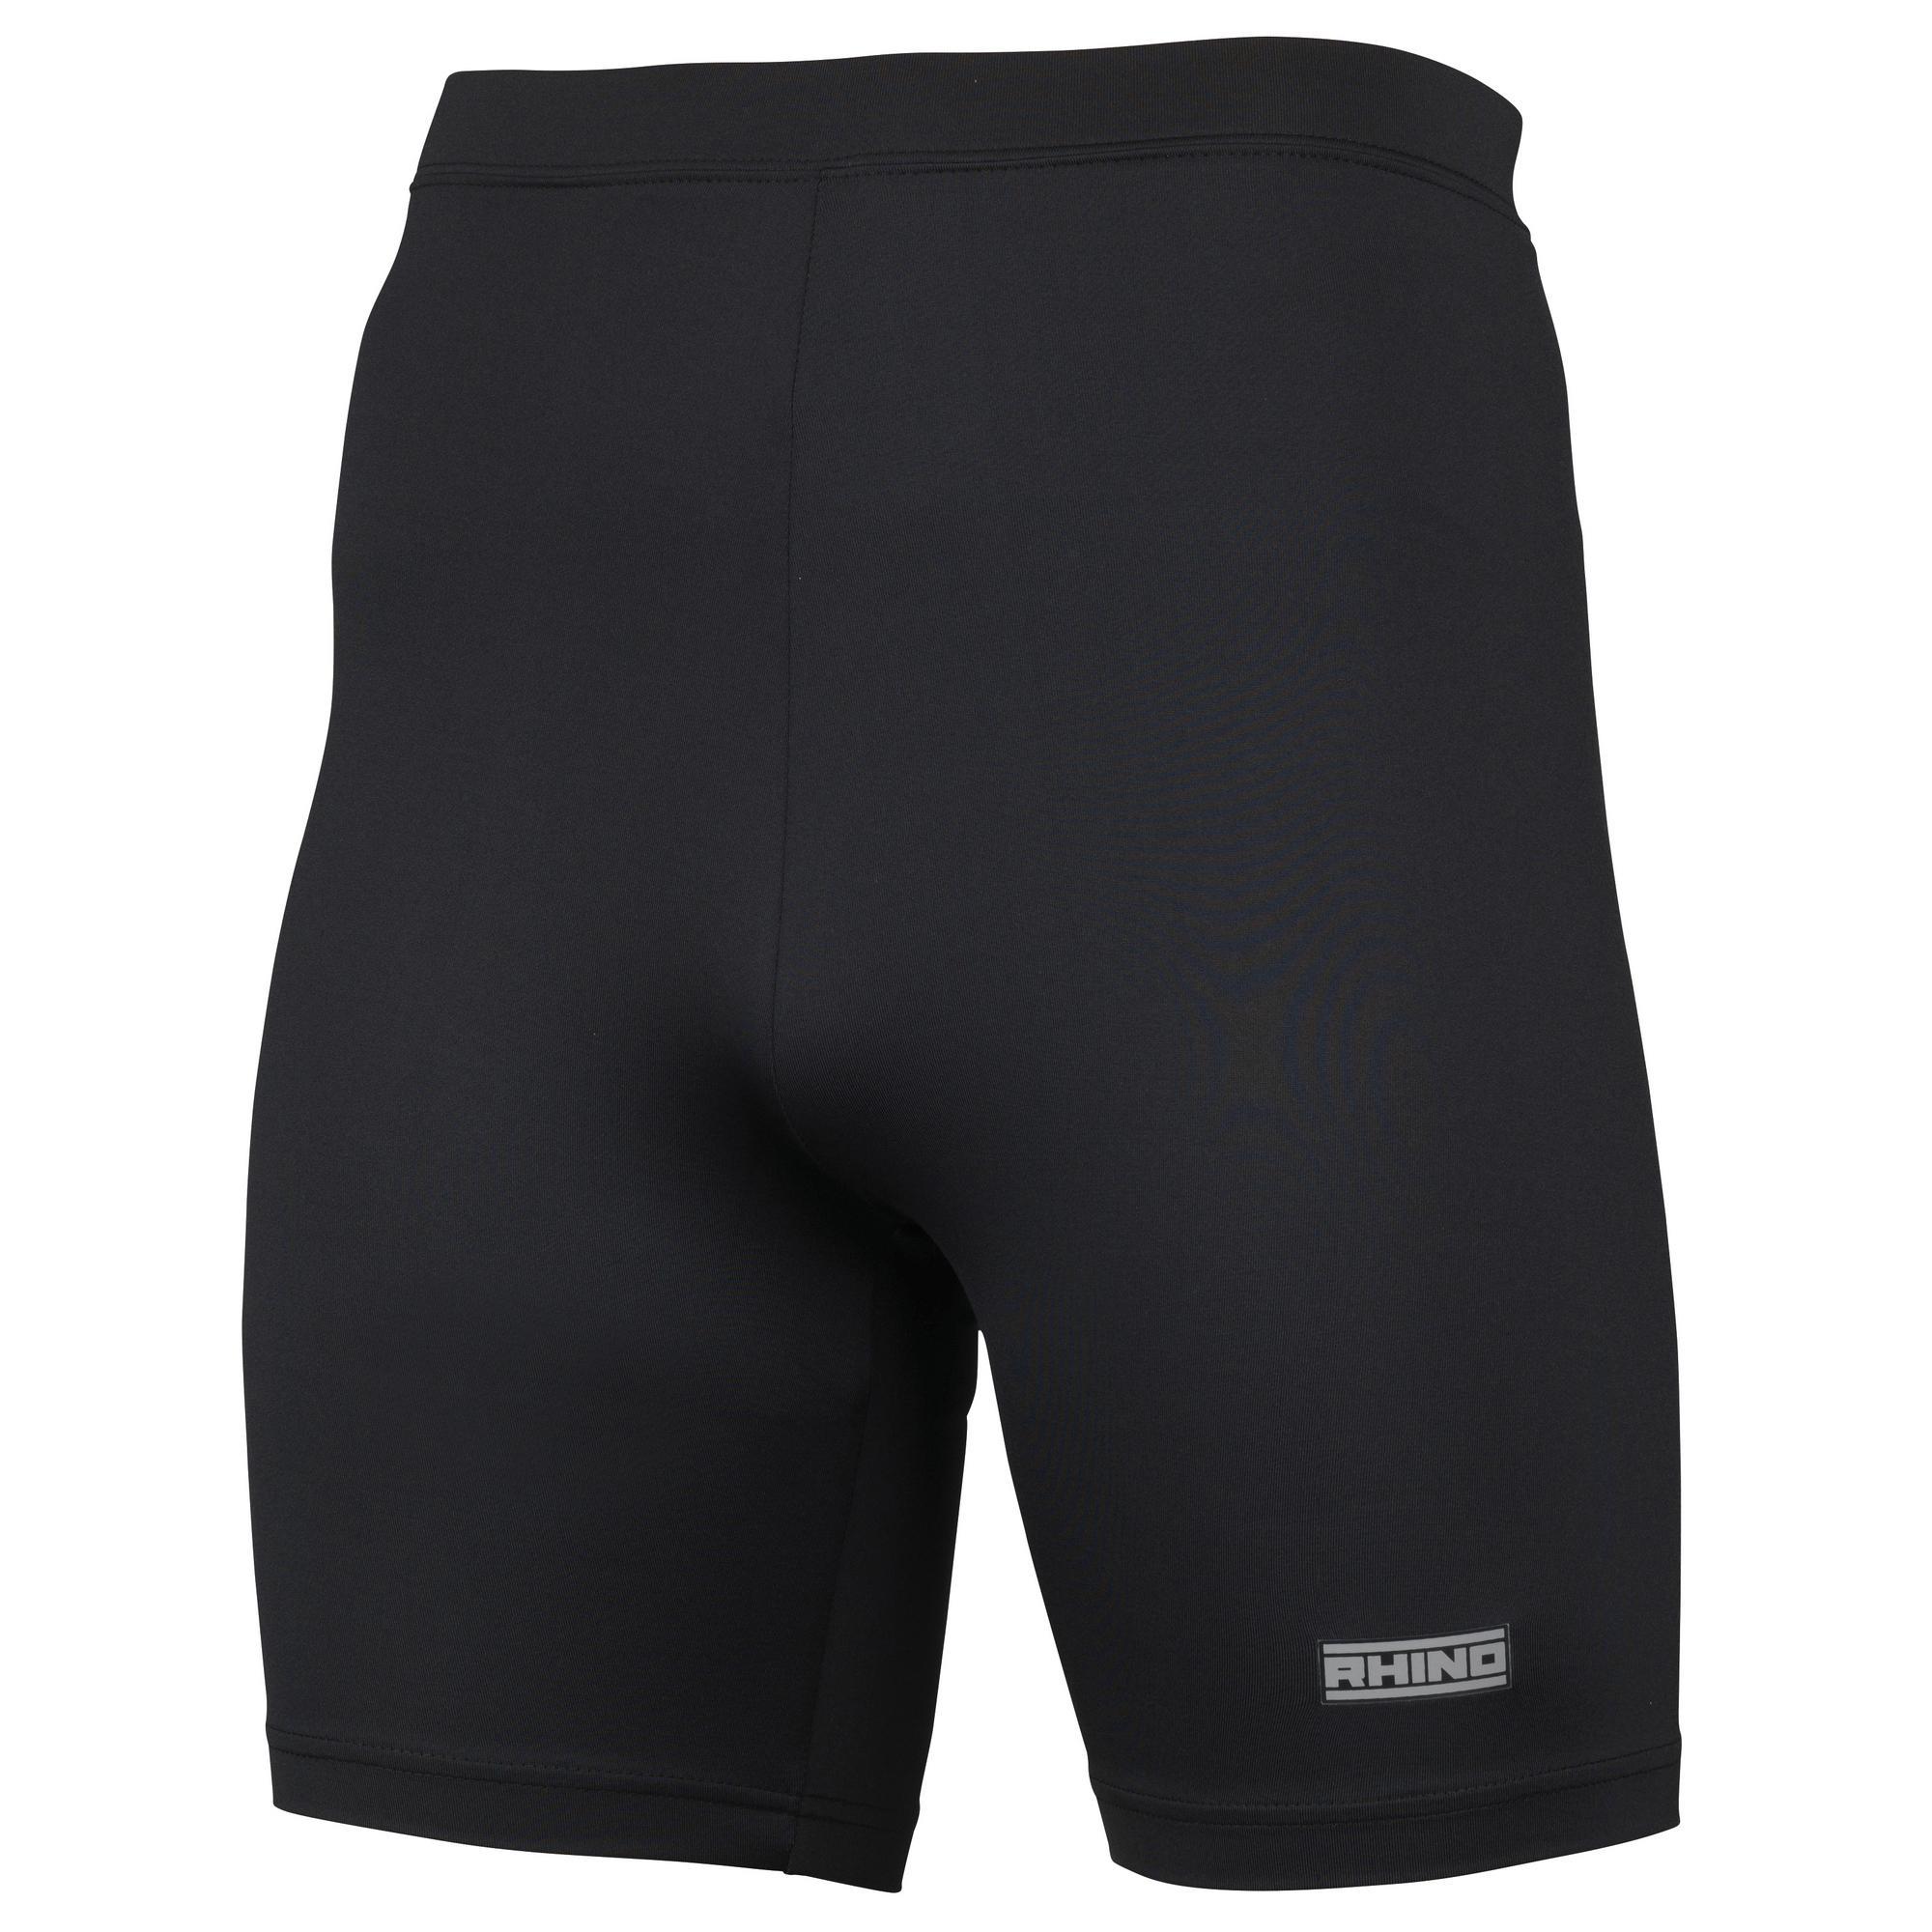 Rhino Mens Sports Base Layer Shorts (Black) (L/XL)